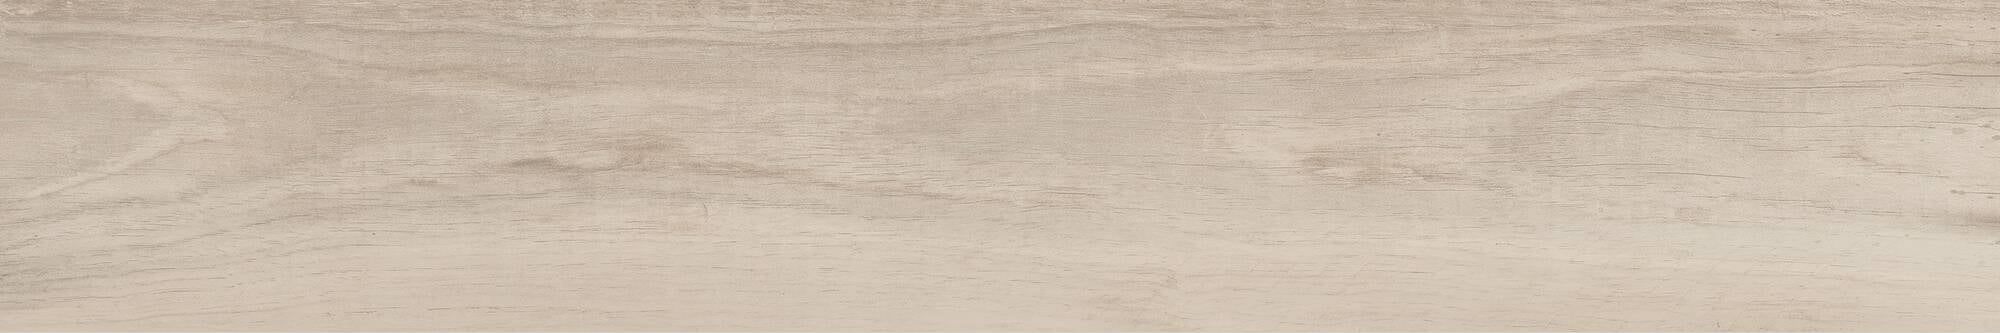 Vloertegel Terratinta Softwood 20x120x1 cm Honey 1,44M2